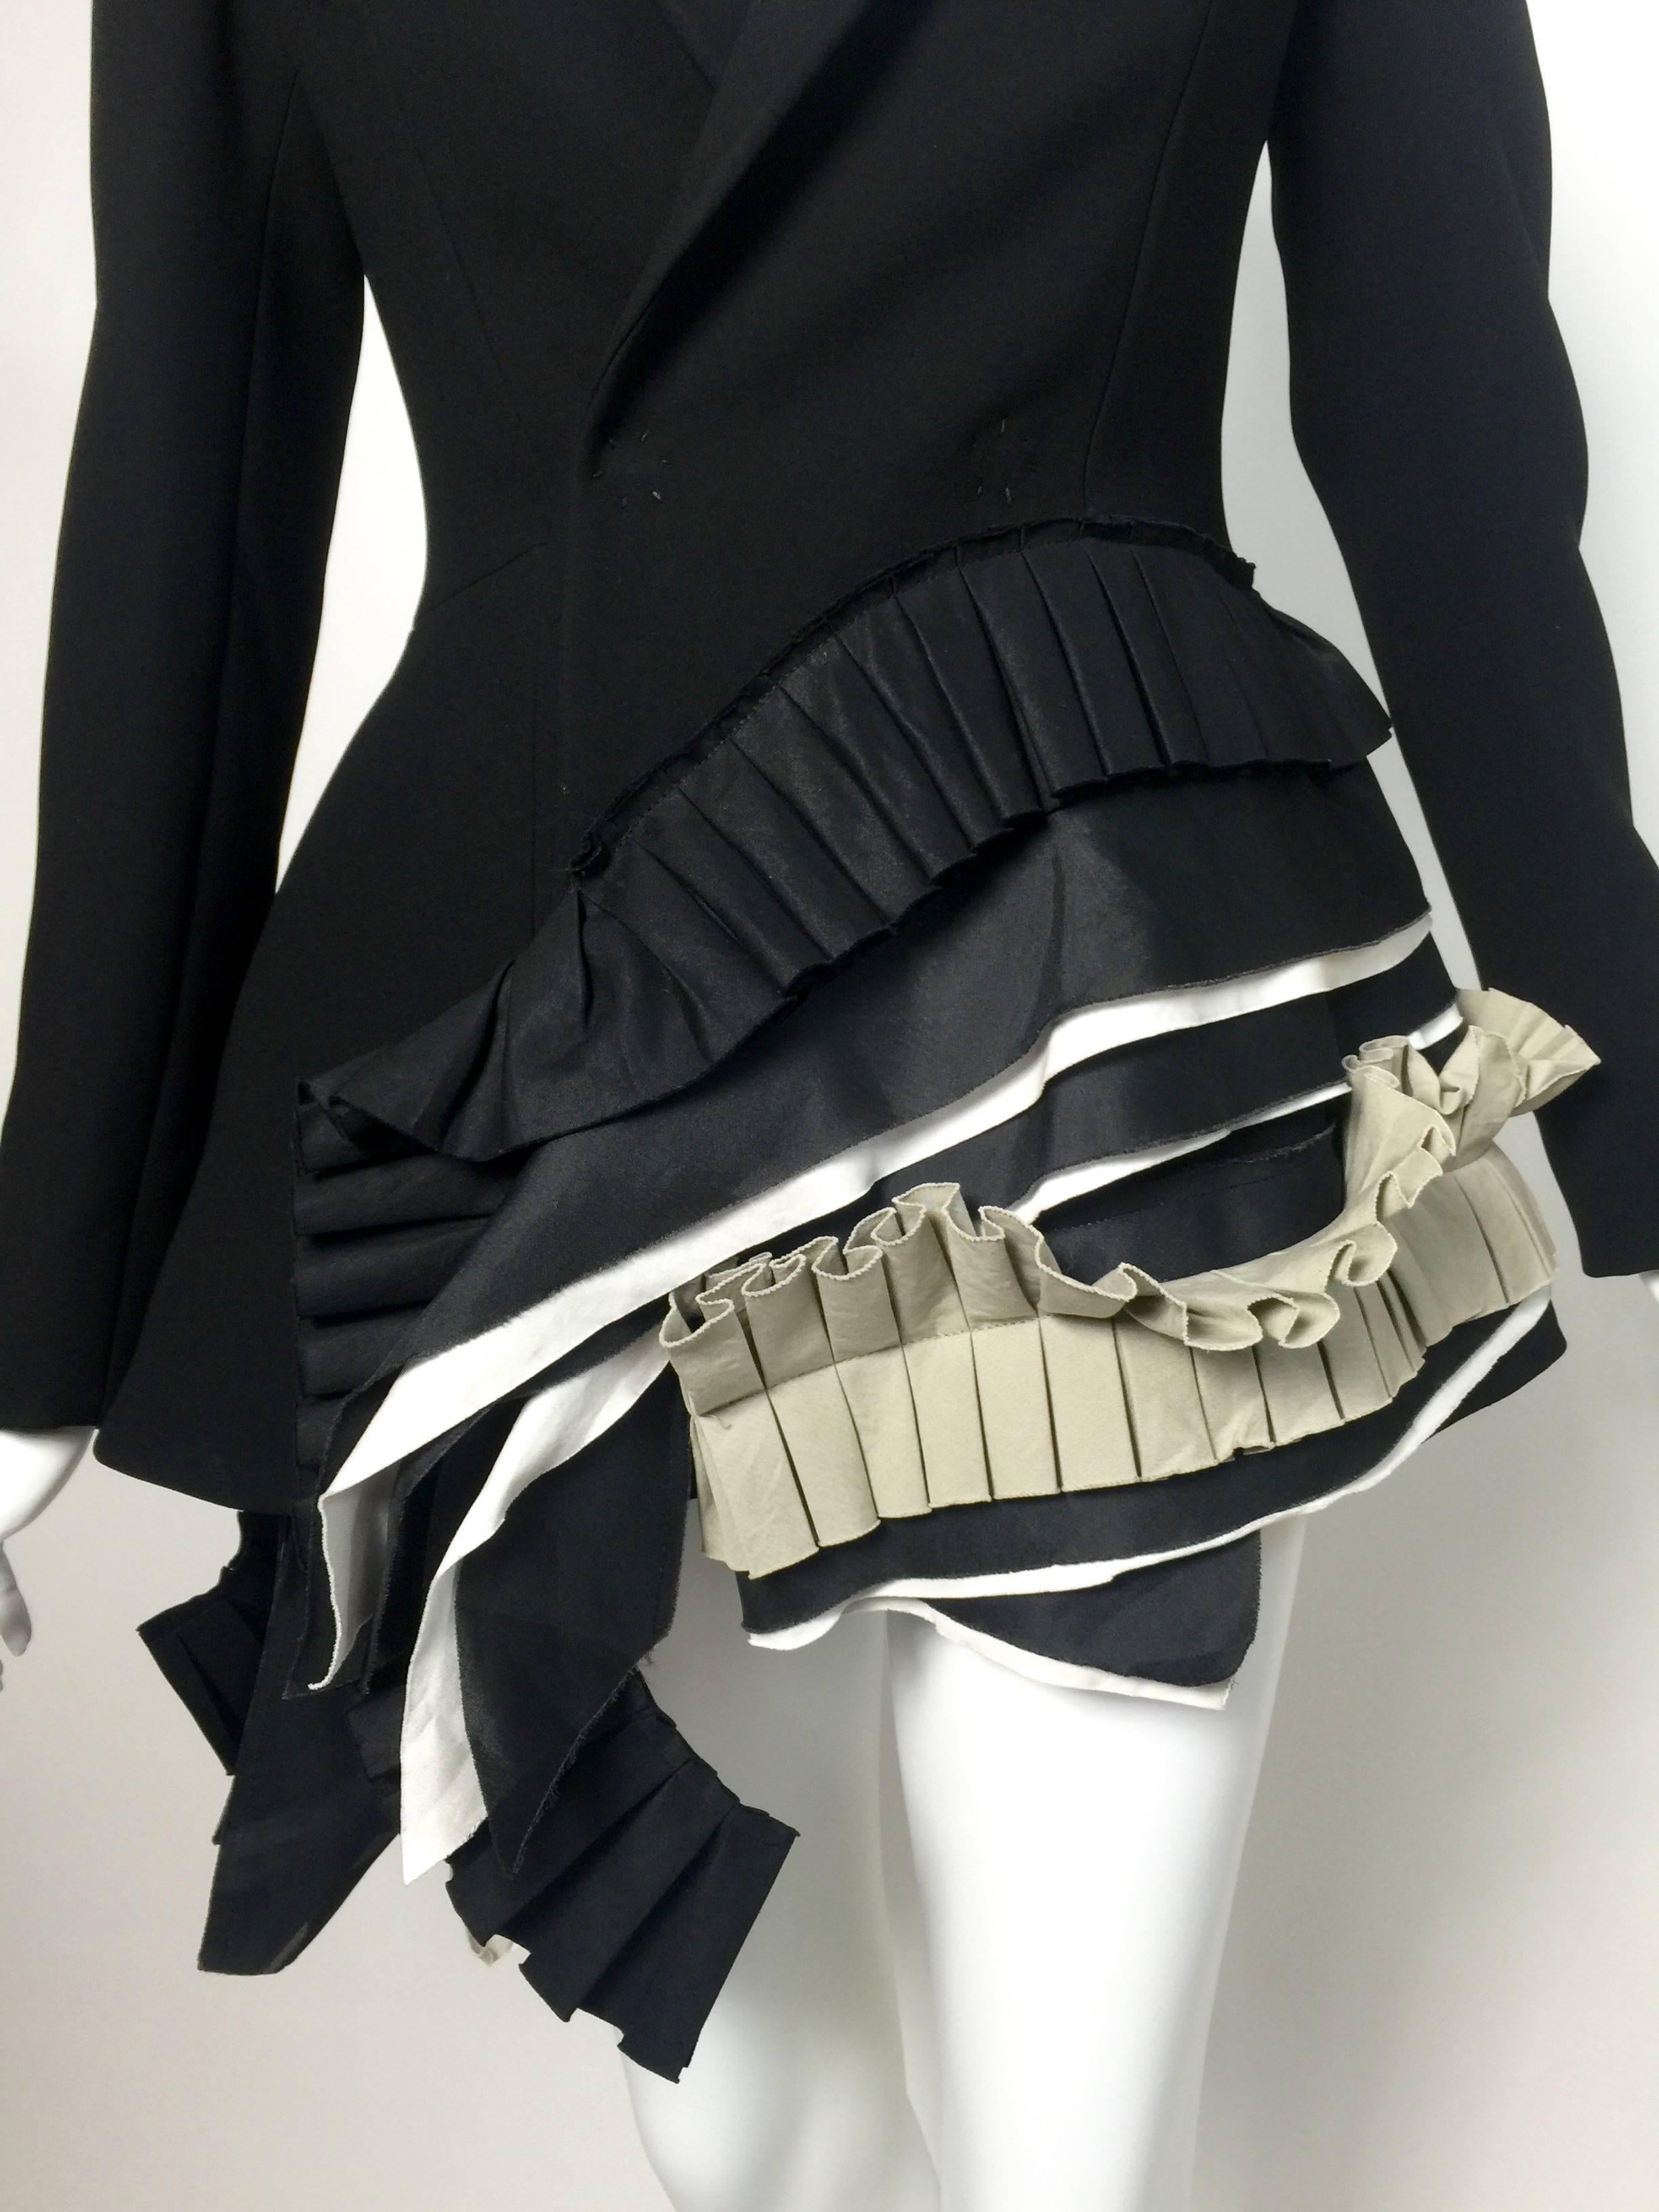 Bottega Veneta Sculptural Pleats and Ruffles Origami Jacket Spring 2014 3